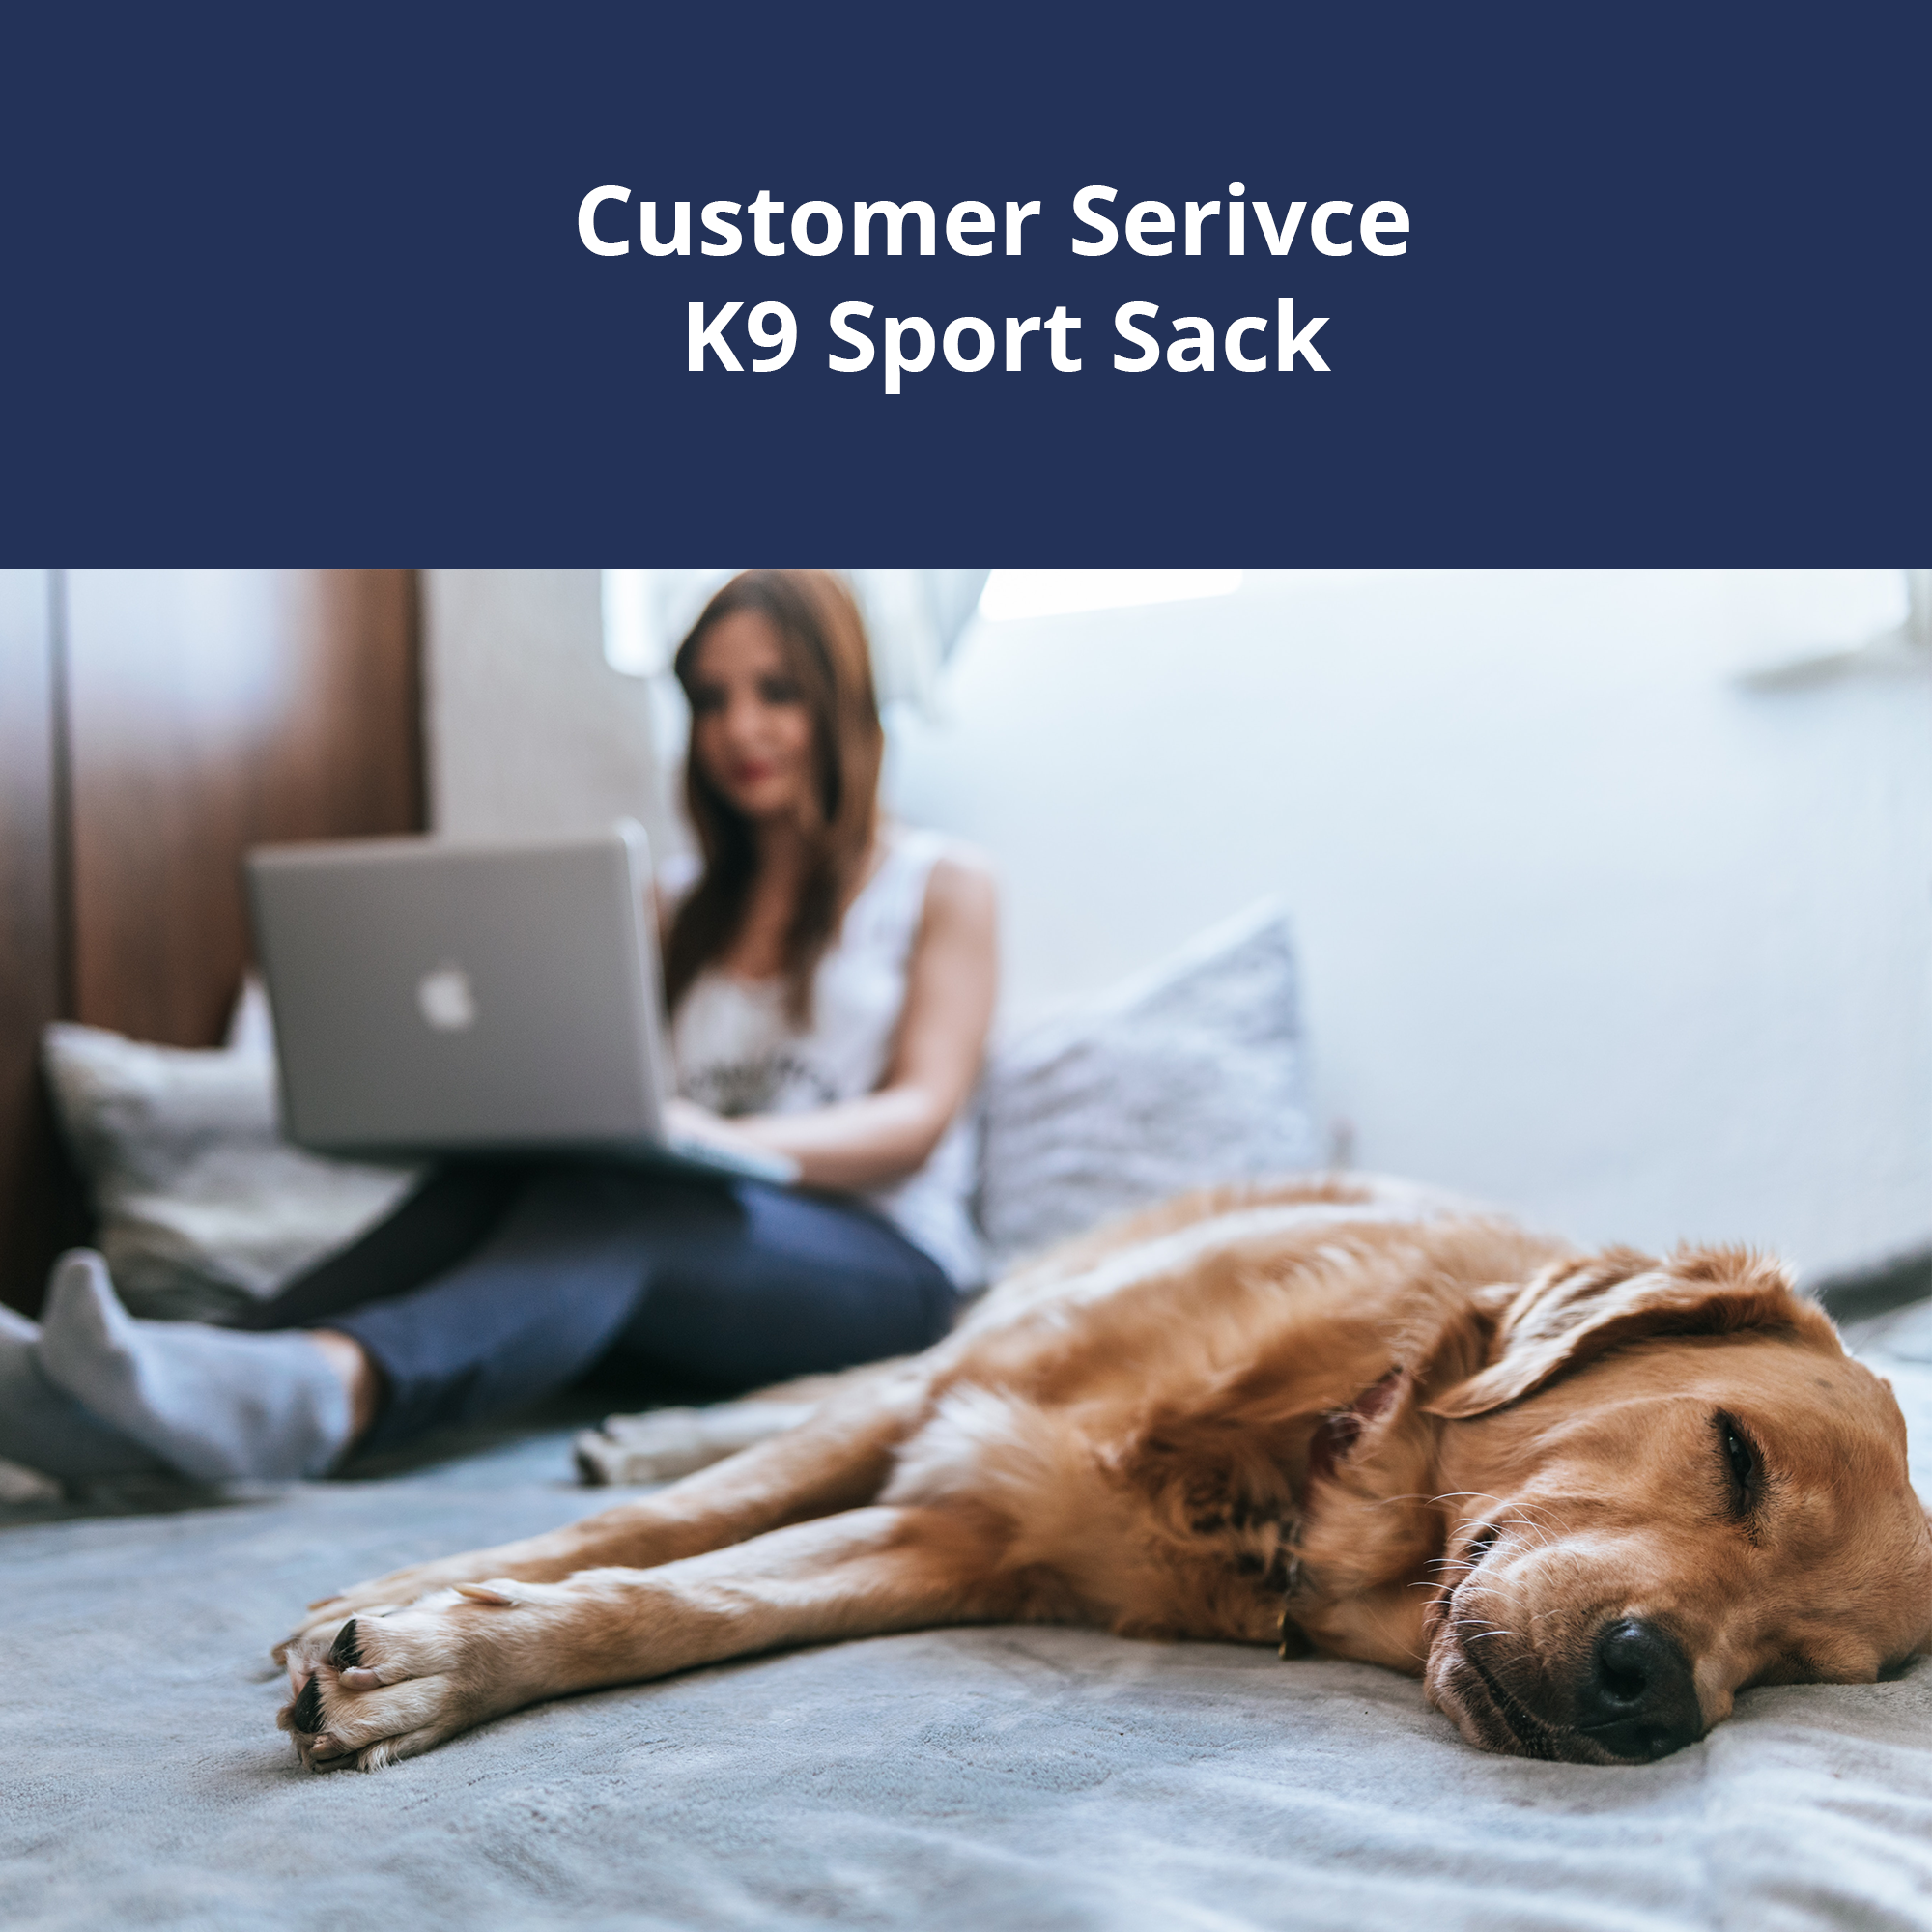 Service K9 Sport Sack